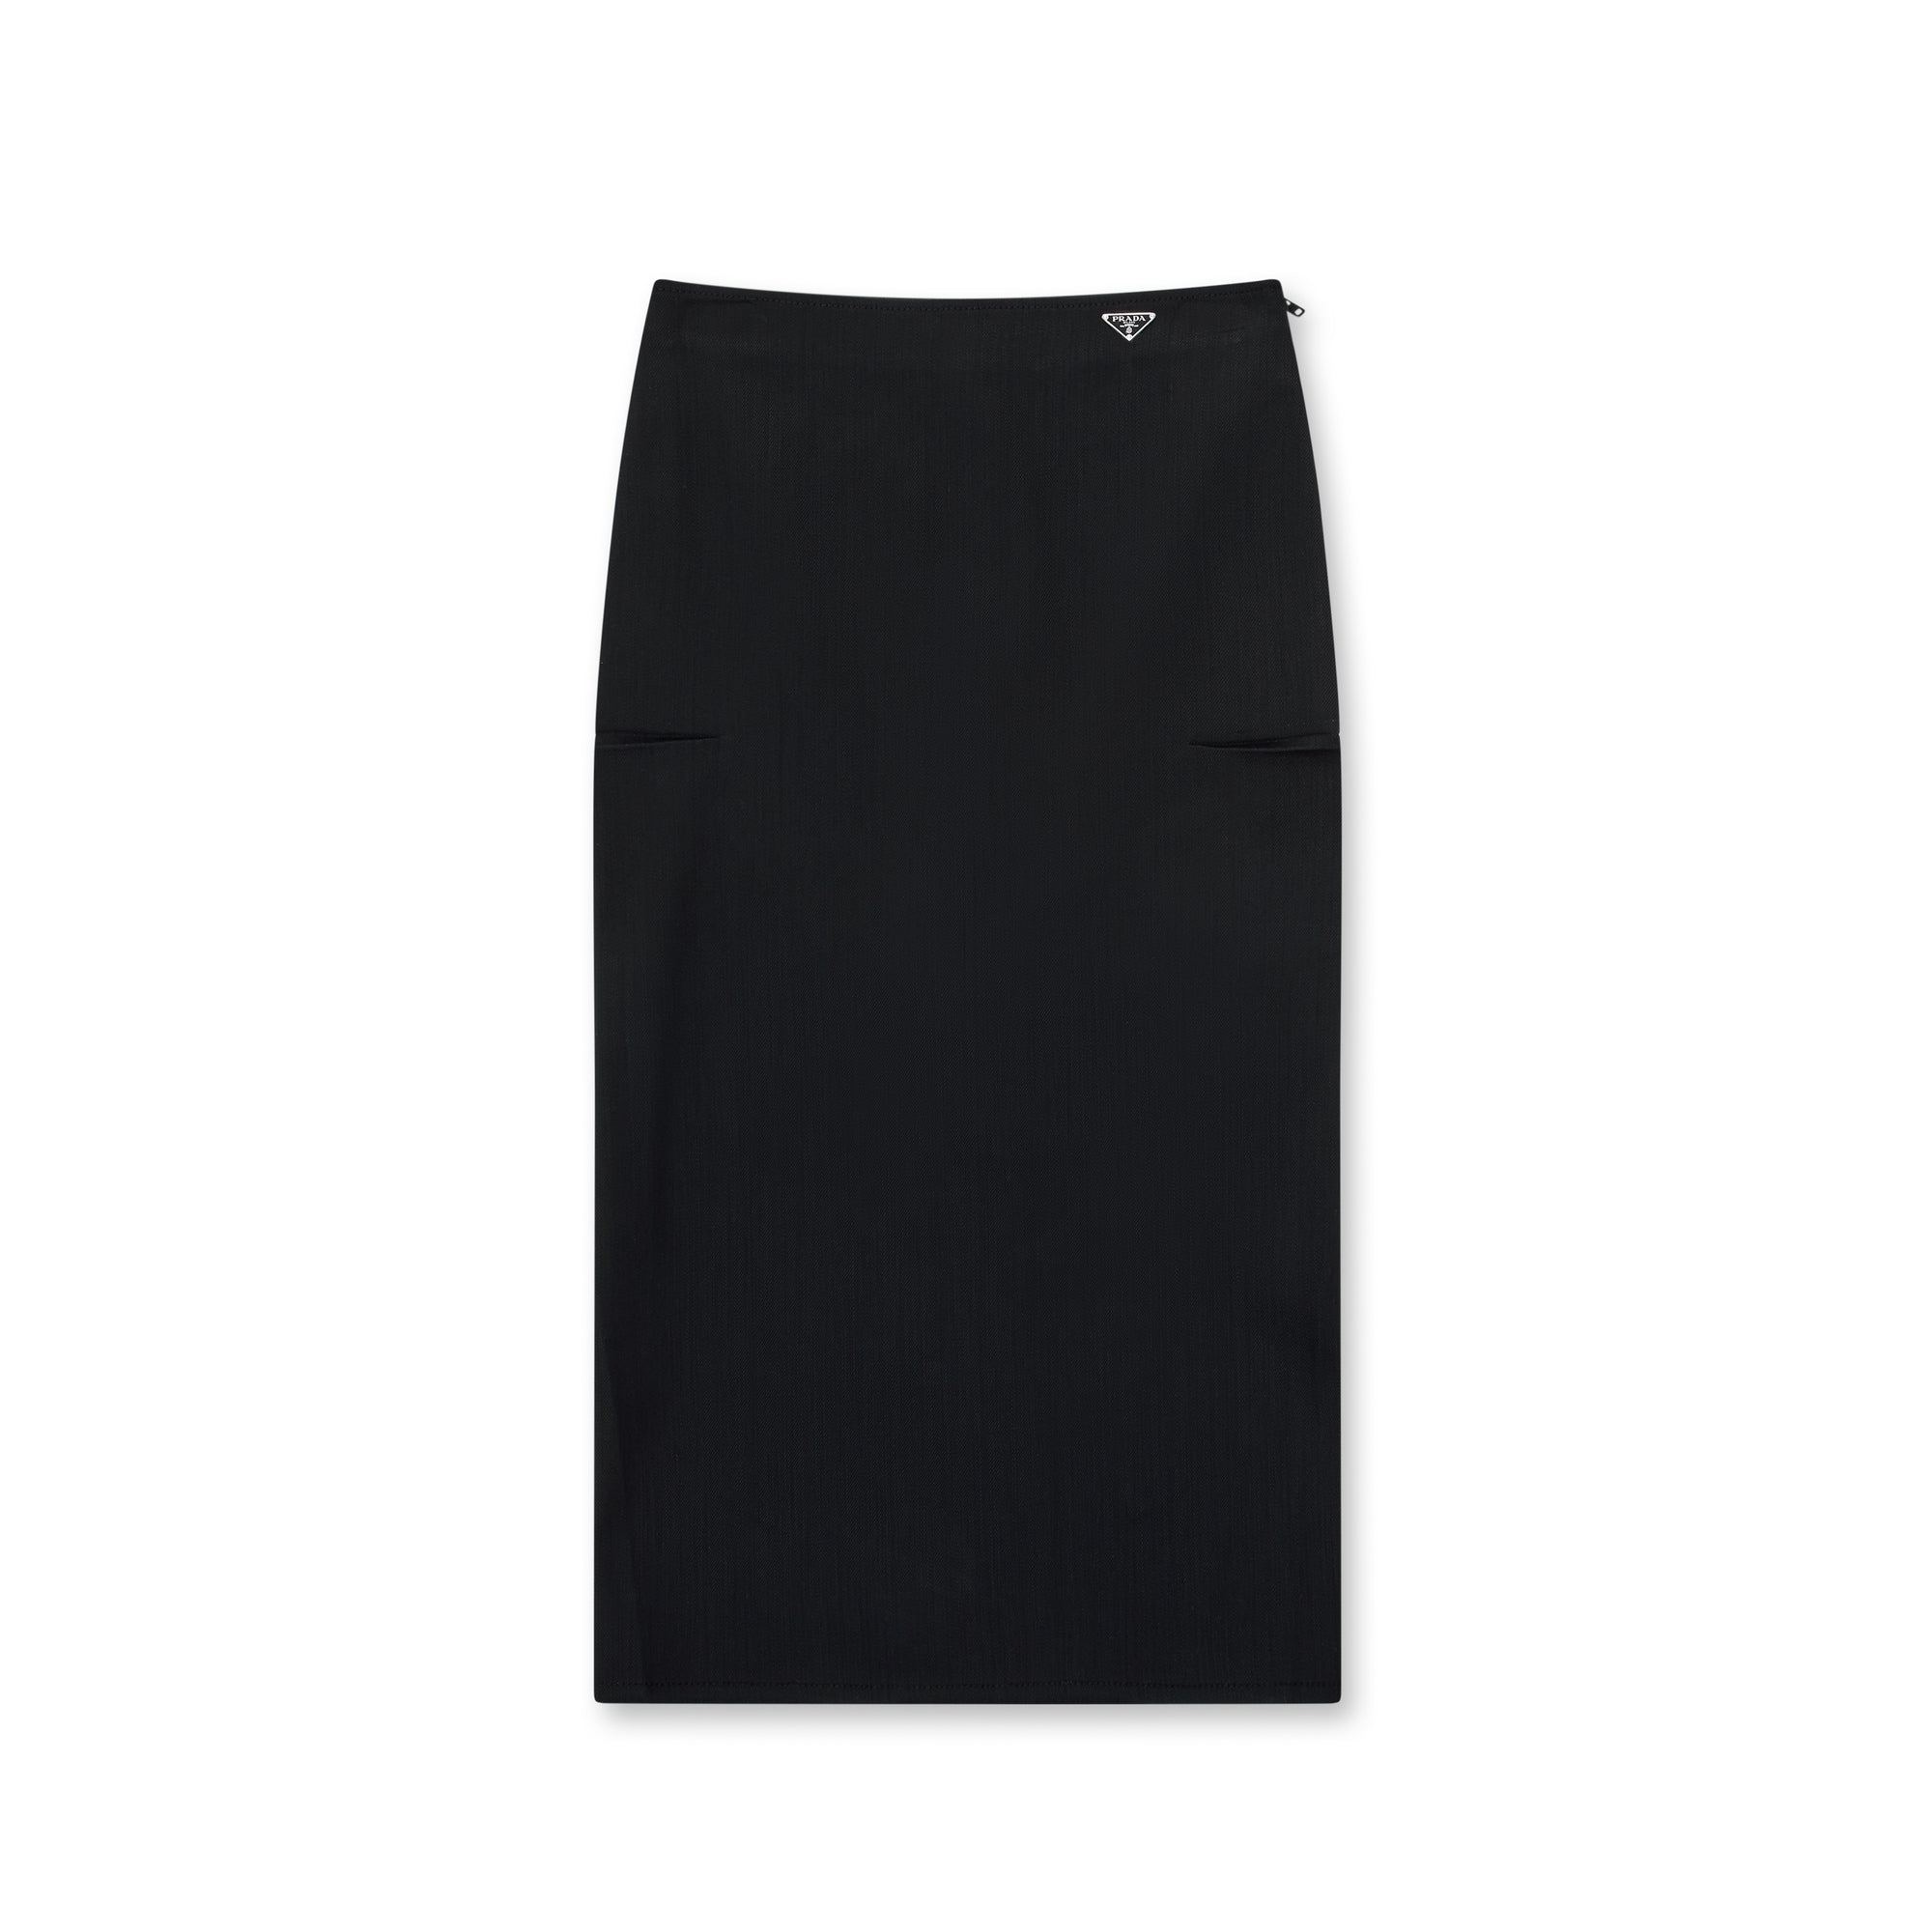 Prada - Women's Stretch Denim Pencil Skirt - (Black) view 1